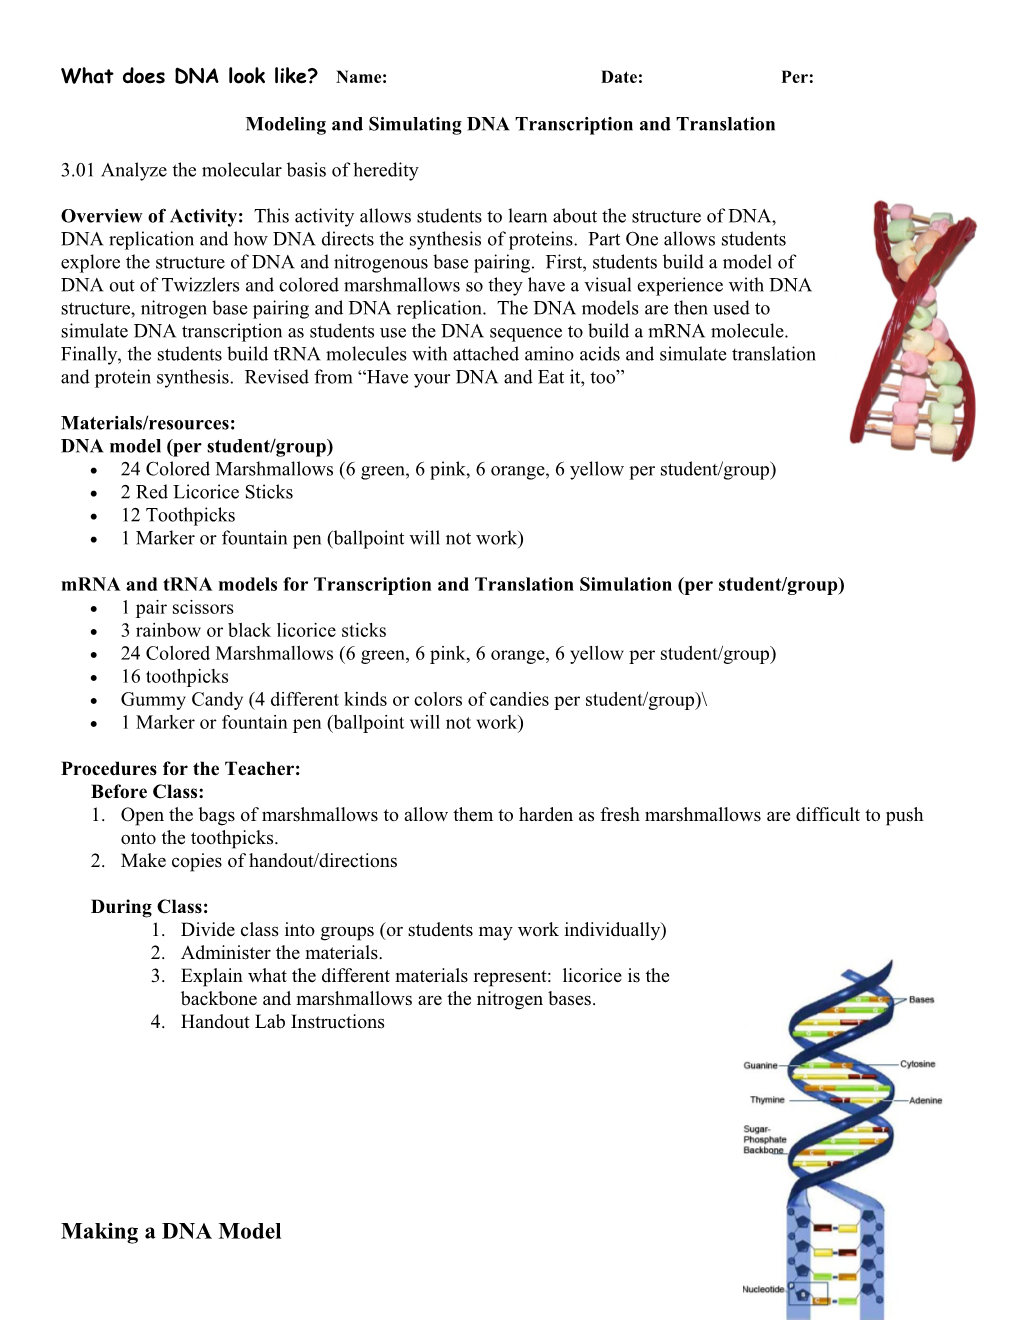 Modeling and Simulating DNA Transcription and Translation